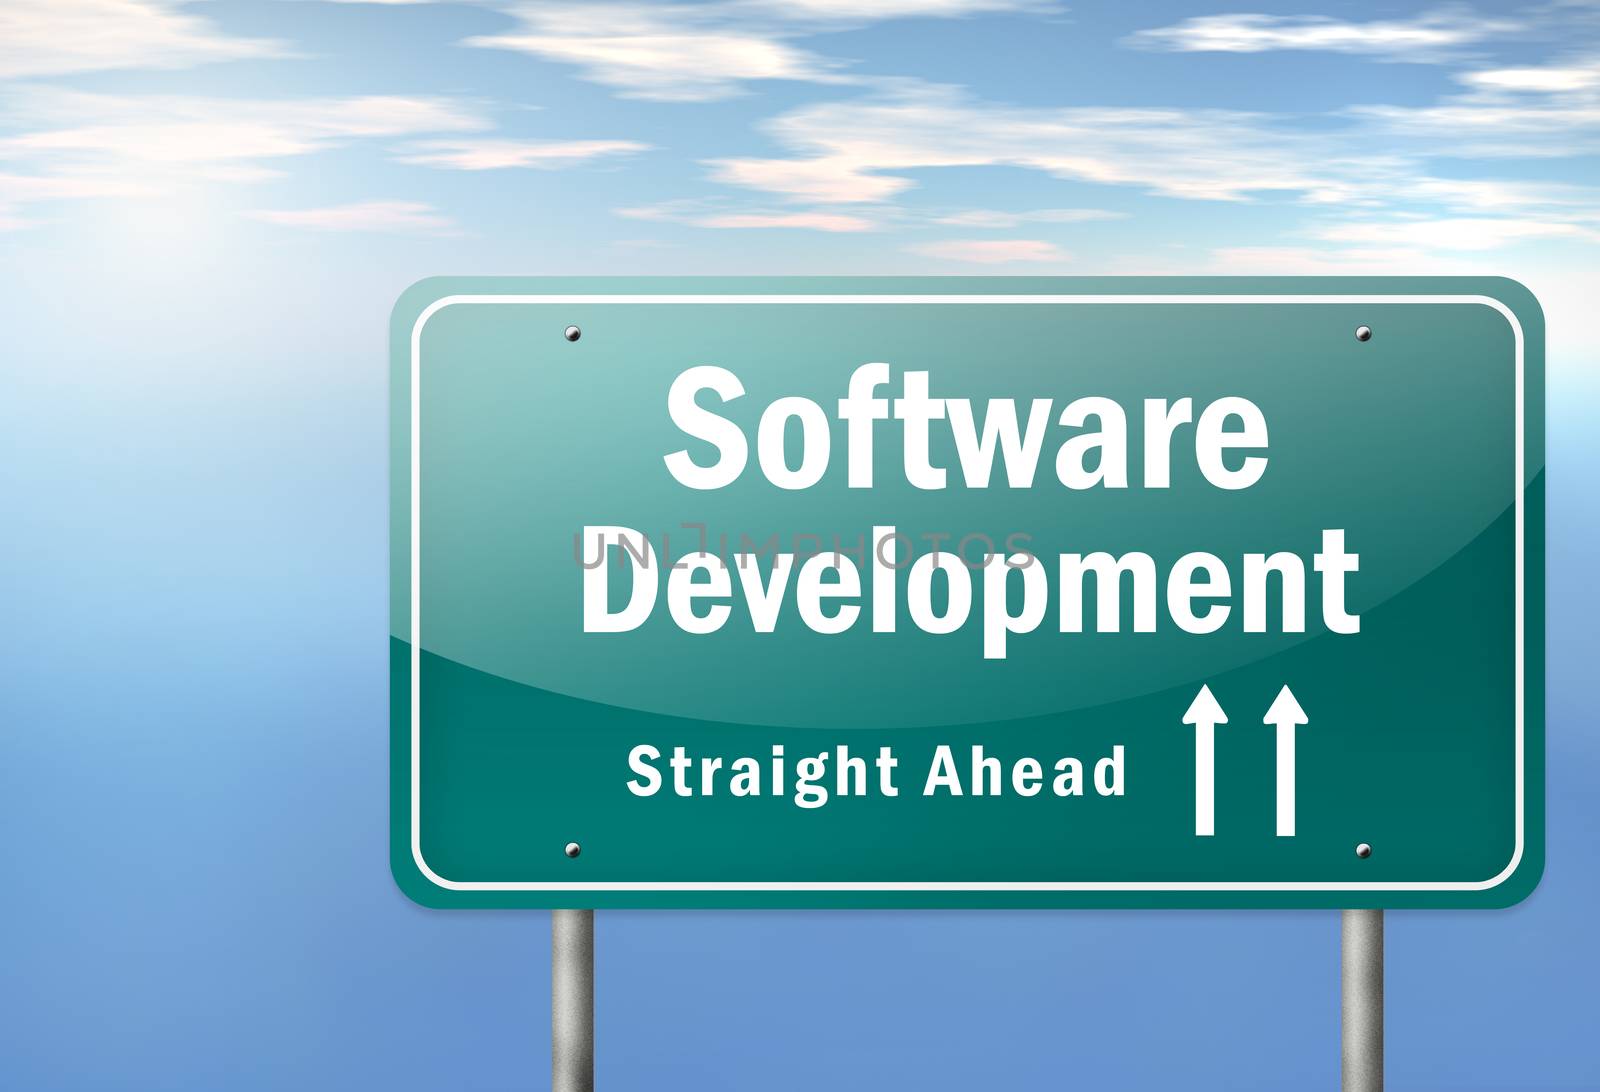 Highway Signpost with Software Development wording